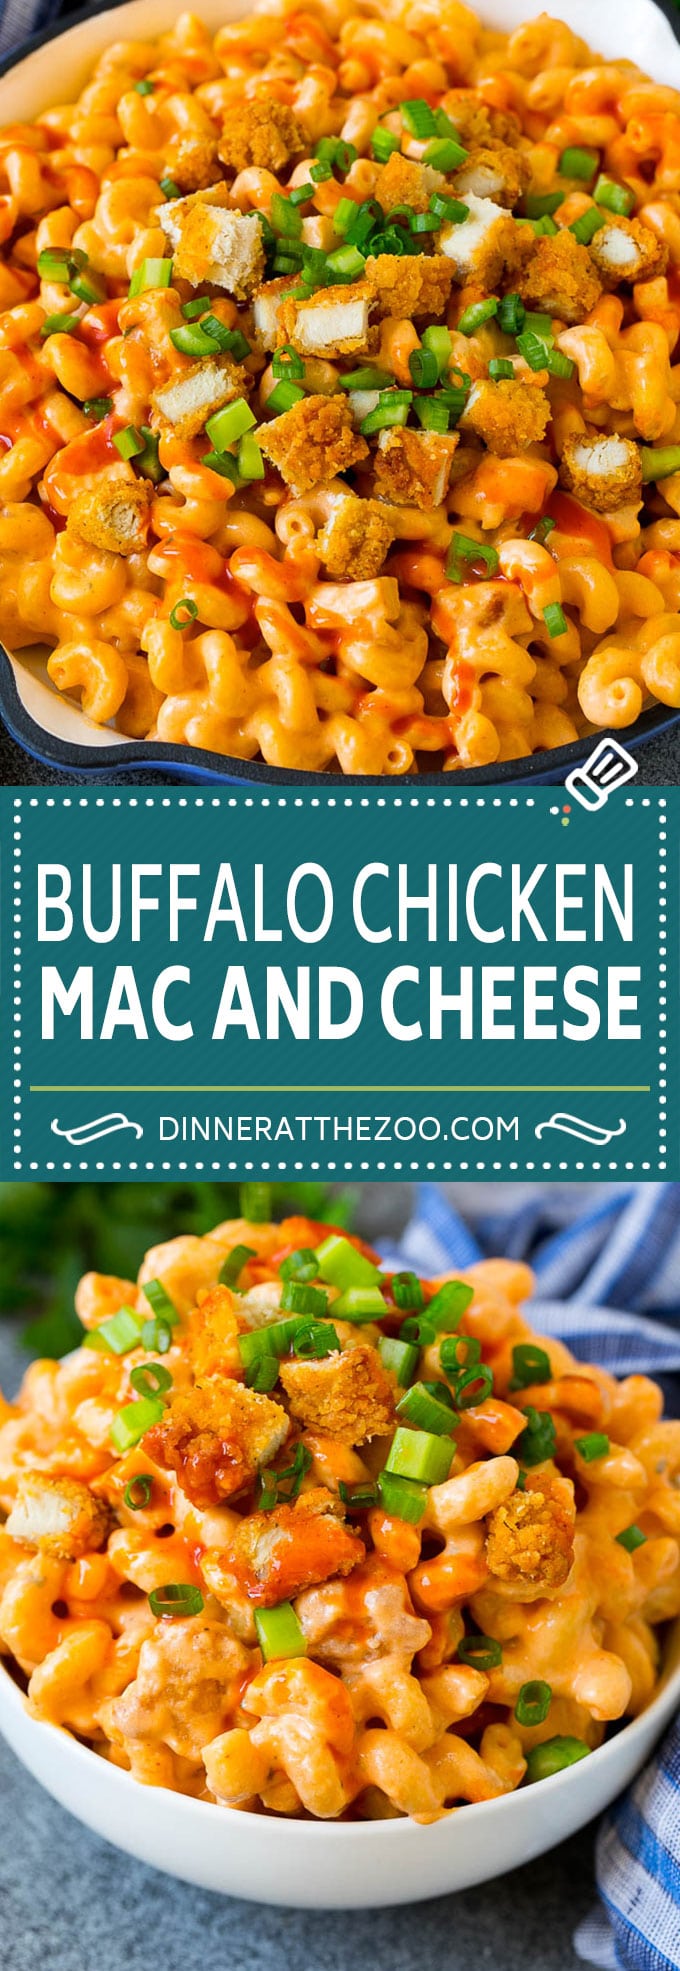 Buffalo Chicken Mac and Cheese Recipe | Spicy Macaroni and Cheese #chicken #buffalochicken #macandcheese #cheese #dinner #pasta #dinneratthezoo